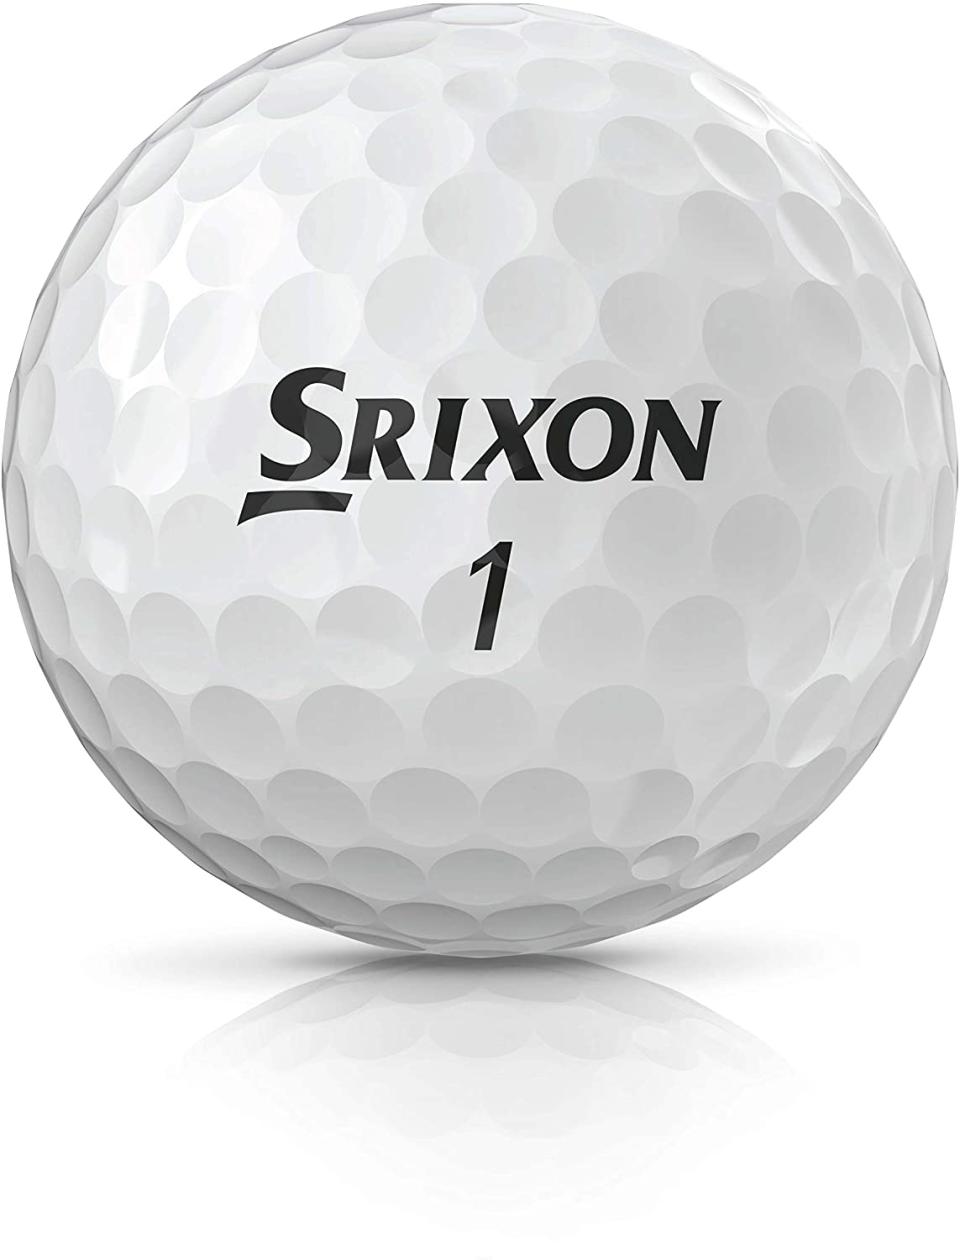 best golf balls 2021 - srixon